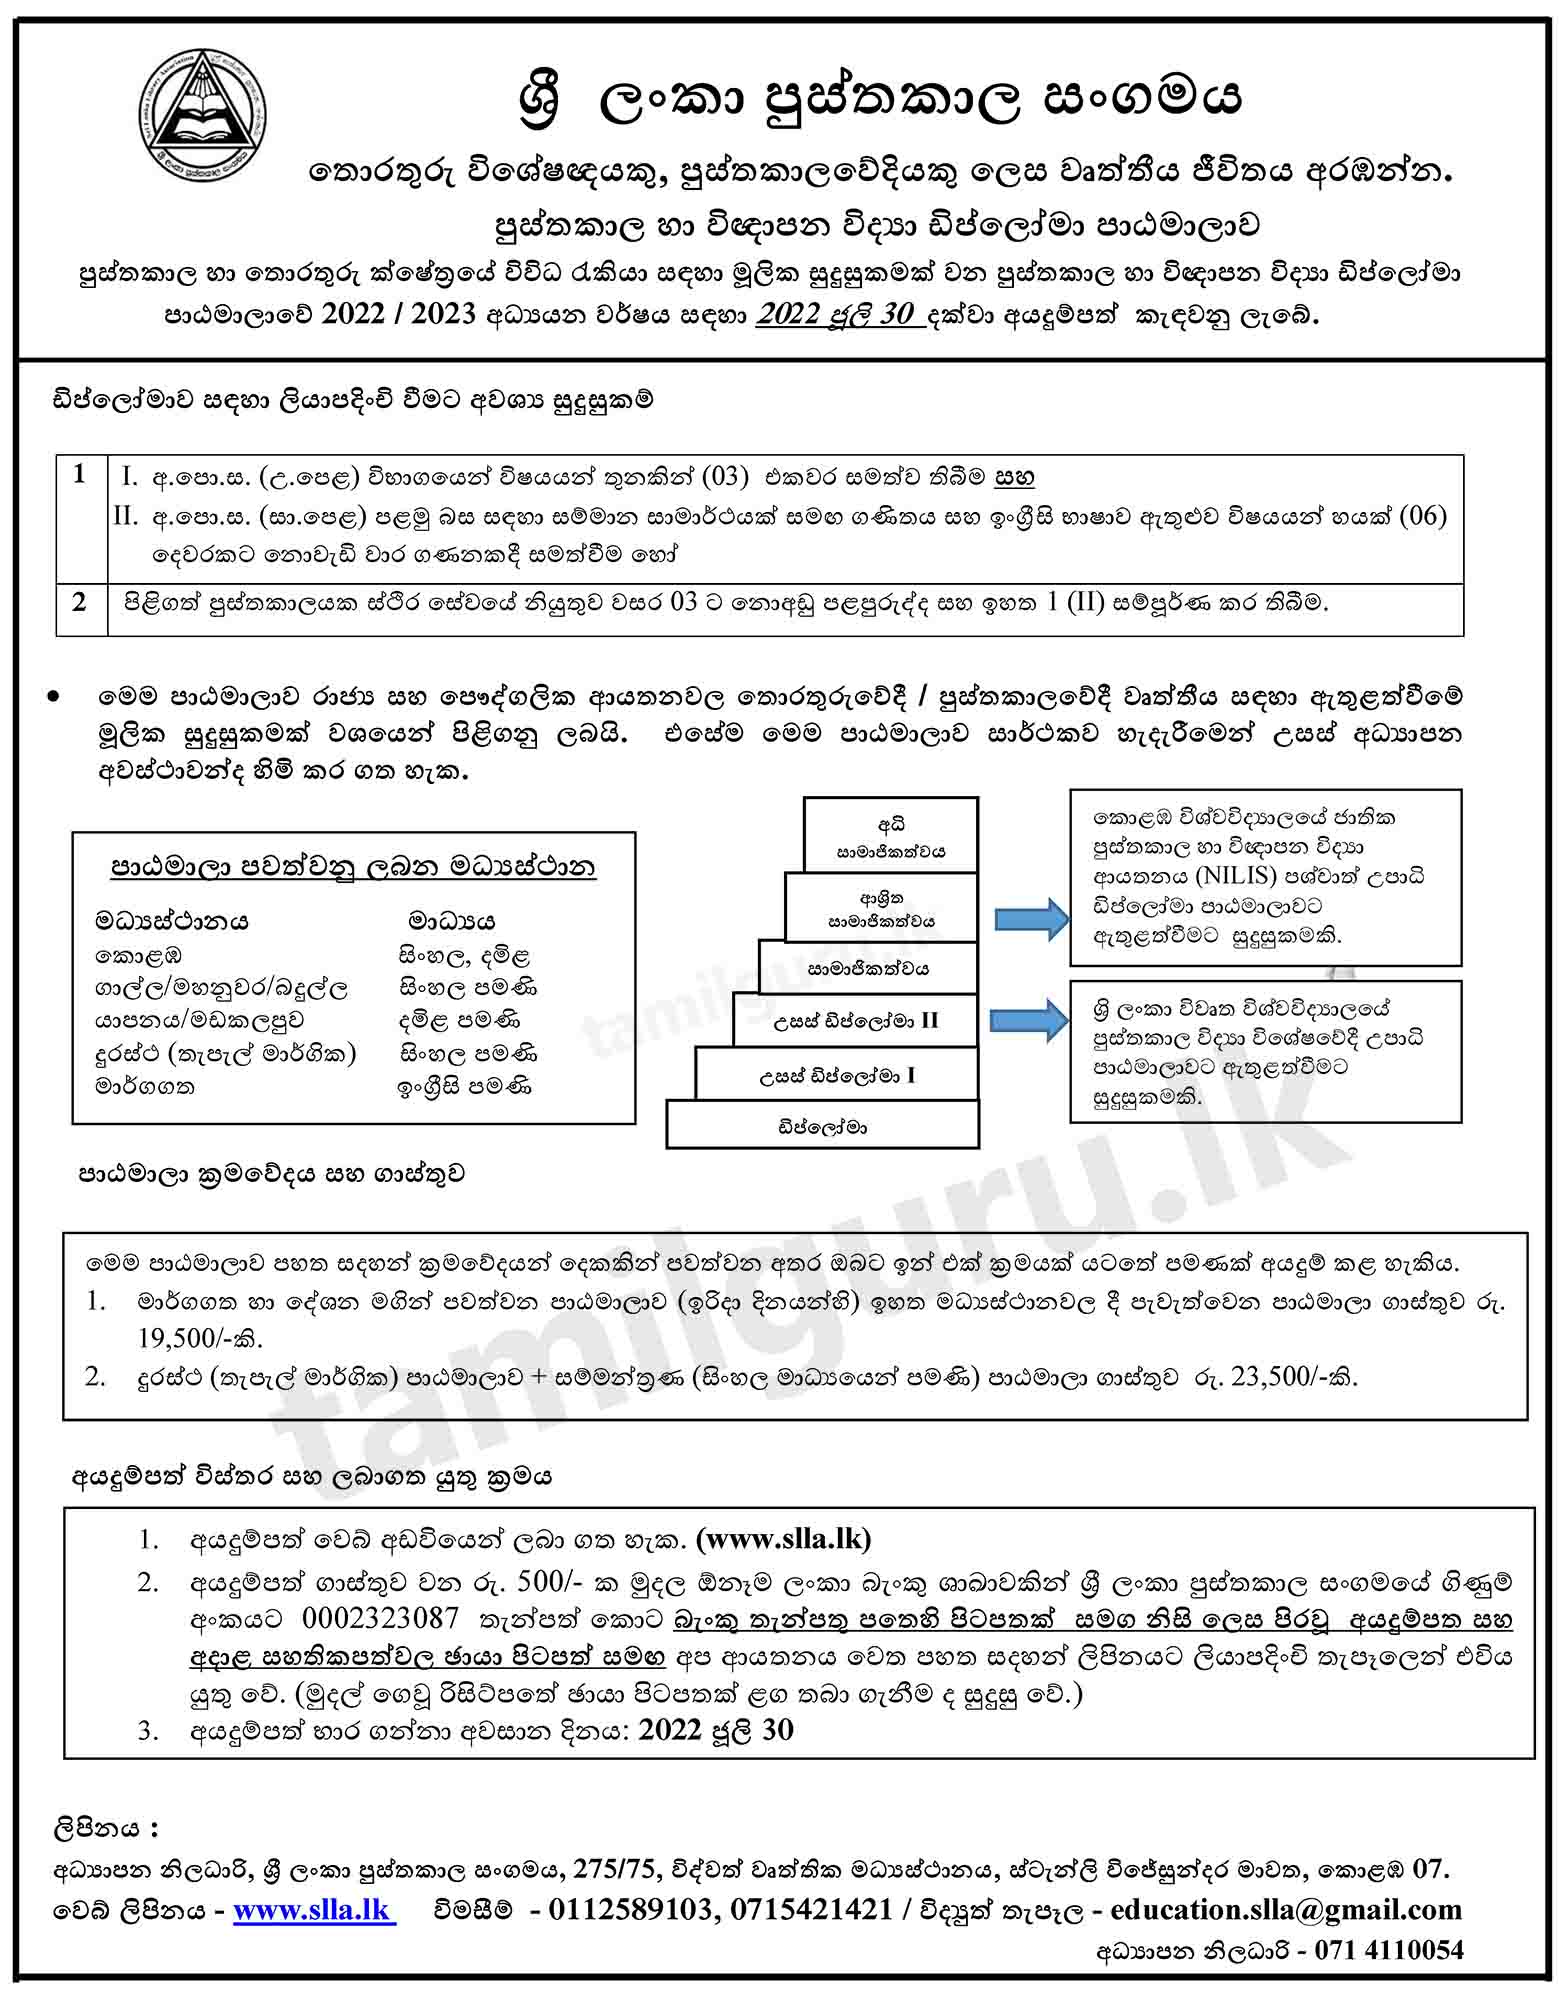 Diploma in Library and Information Science (DLIS) Course 2022/2023 - Sri Lanka Library Association / පුස්තකාල හා විඥාපන විද්‍යා ඩිප්ලෝමා පාඨමාලාව - ශ්‍රී ලංකා පුස්තකාල සංගමය